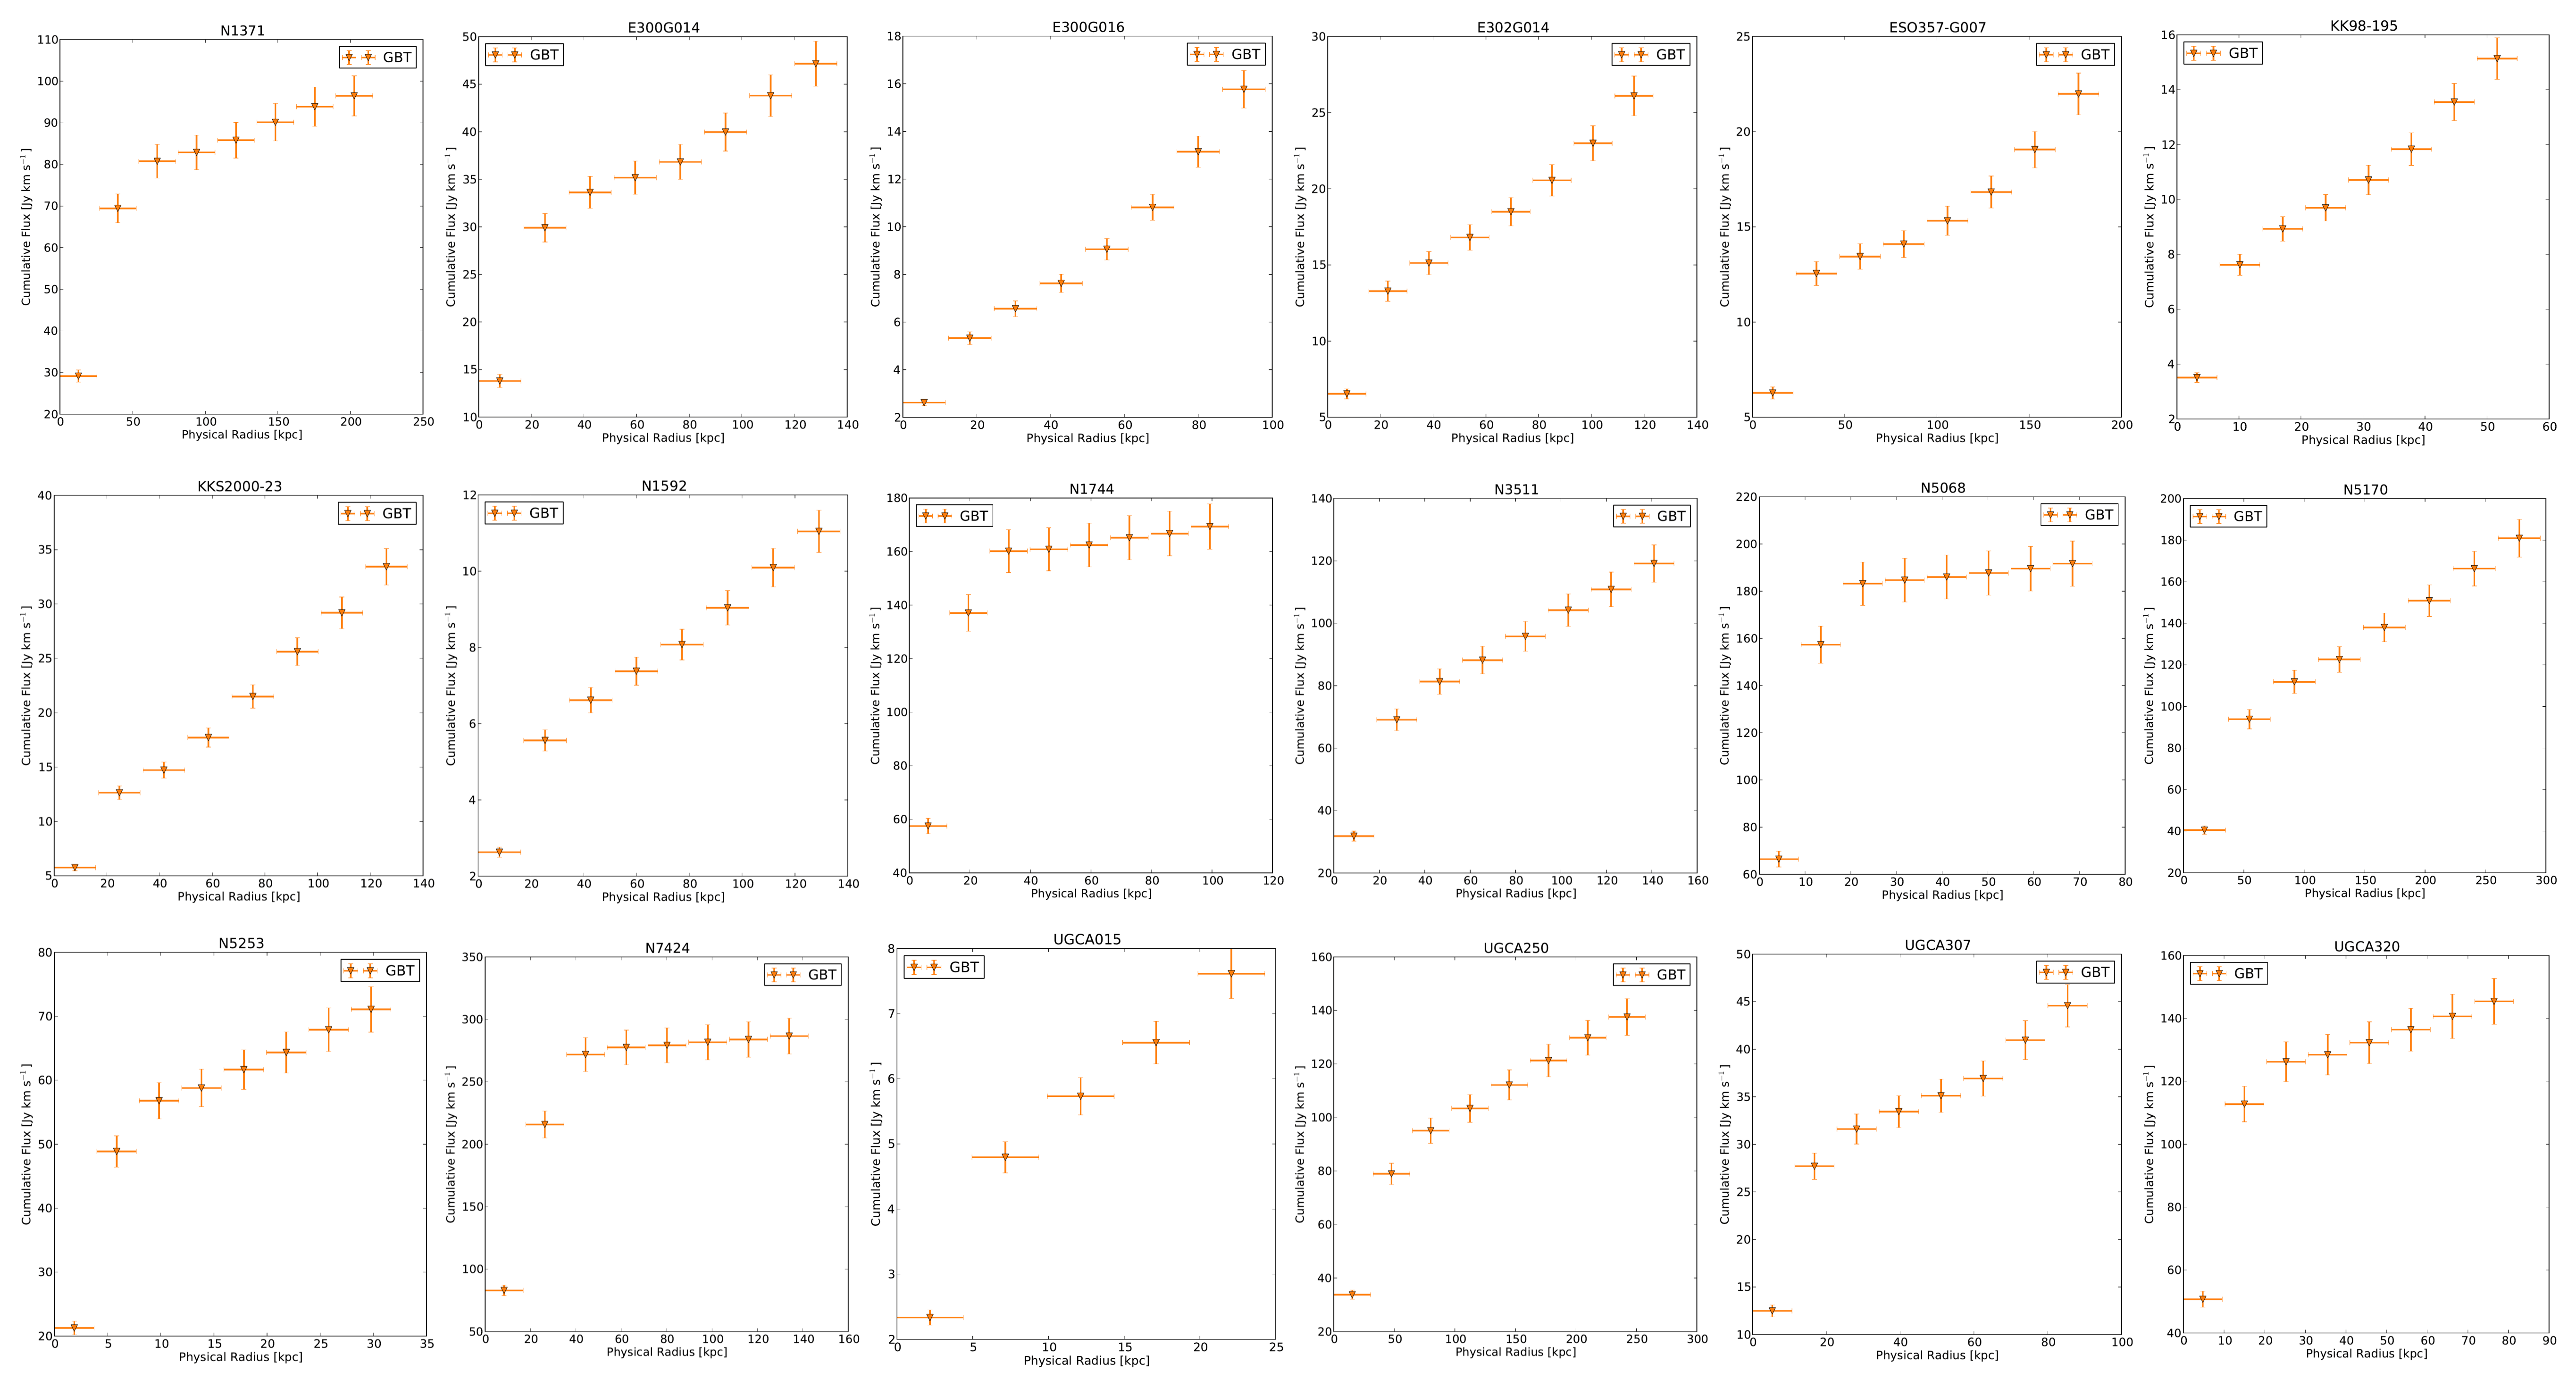 Cumulative HI flux profiles of 18 nearby galaxies